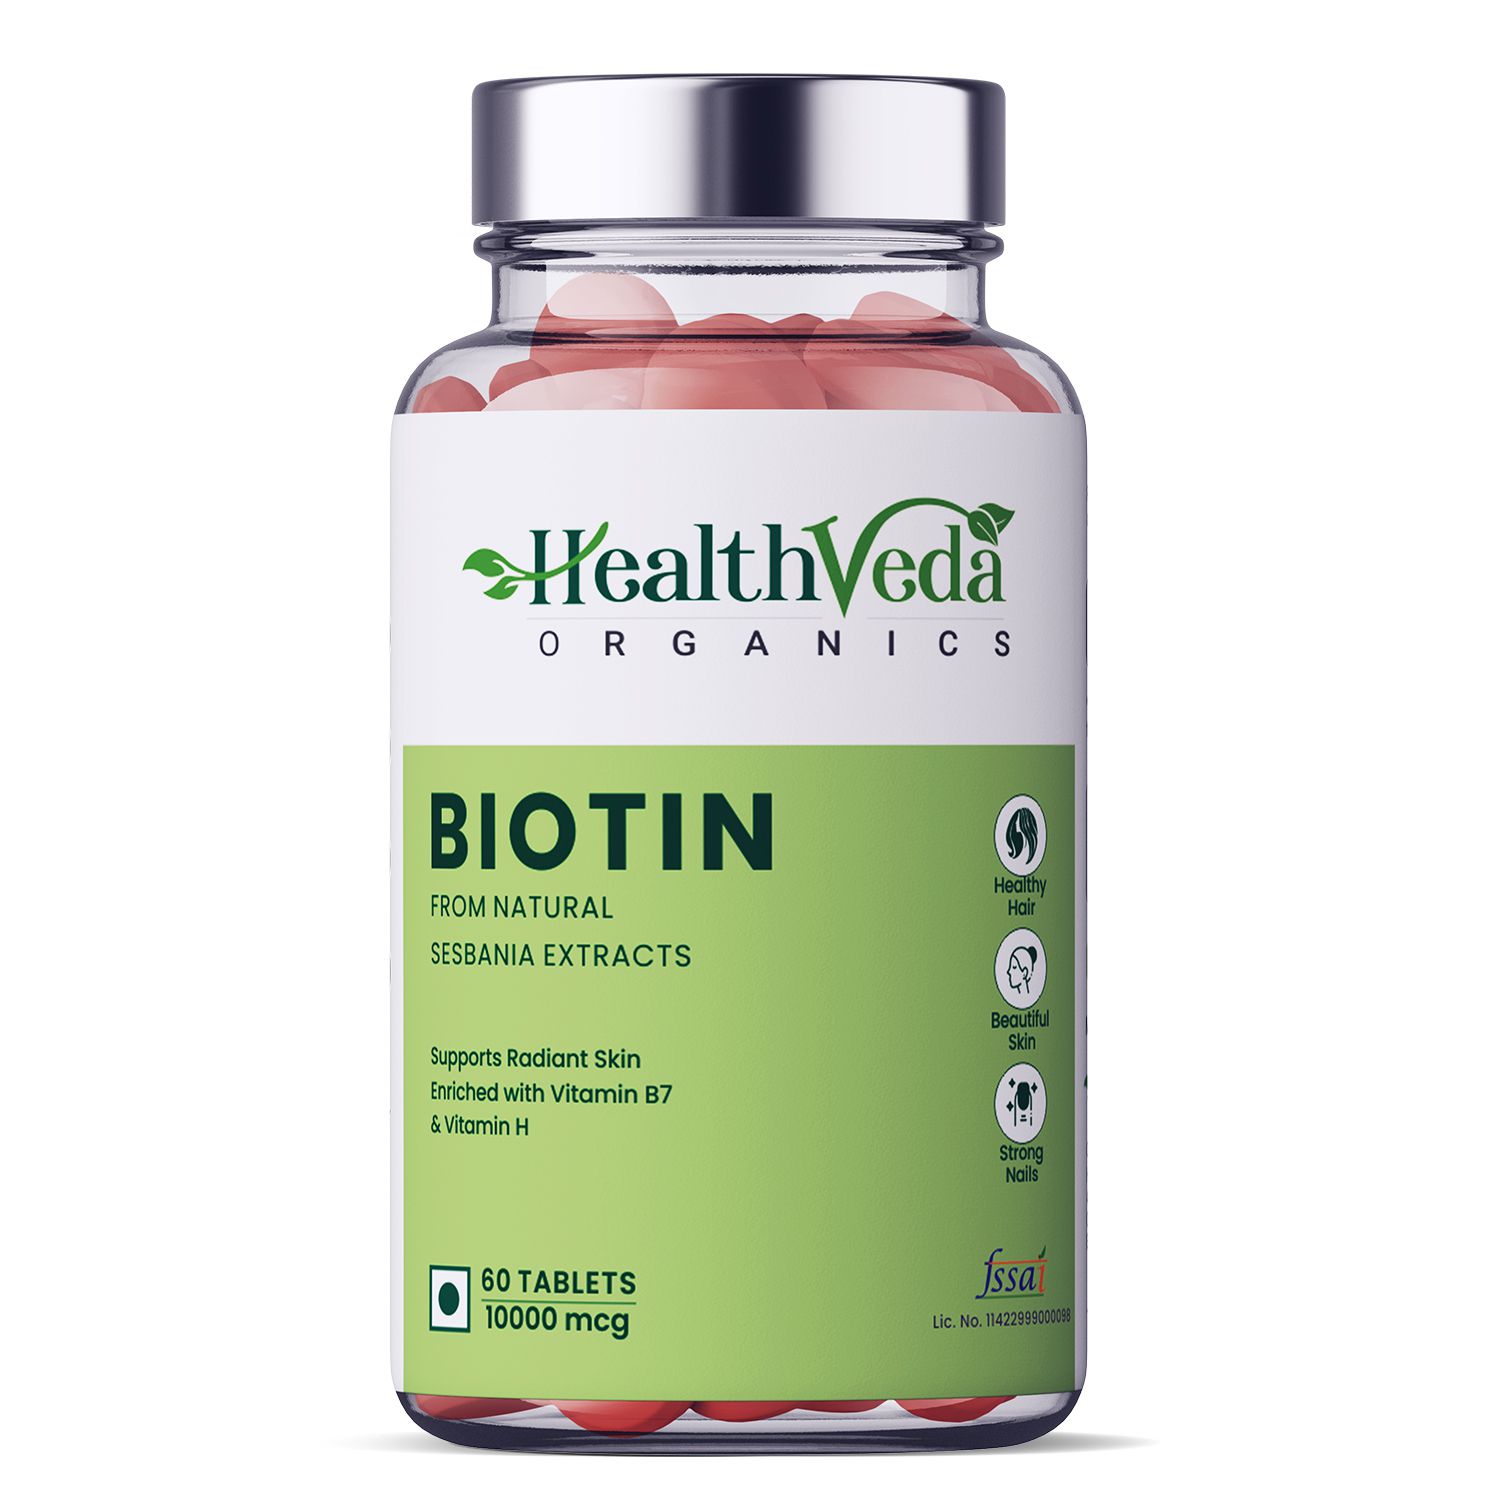     			Health Veda Organics Biotin For Healthy Hair, Skin & Nails, 60 Veg Tablets